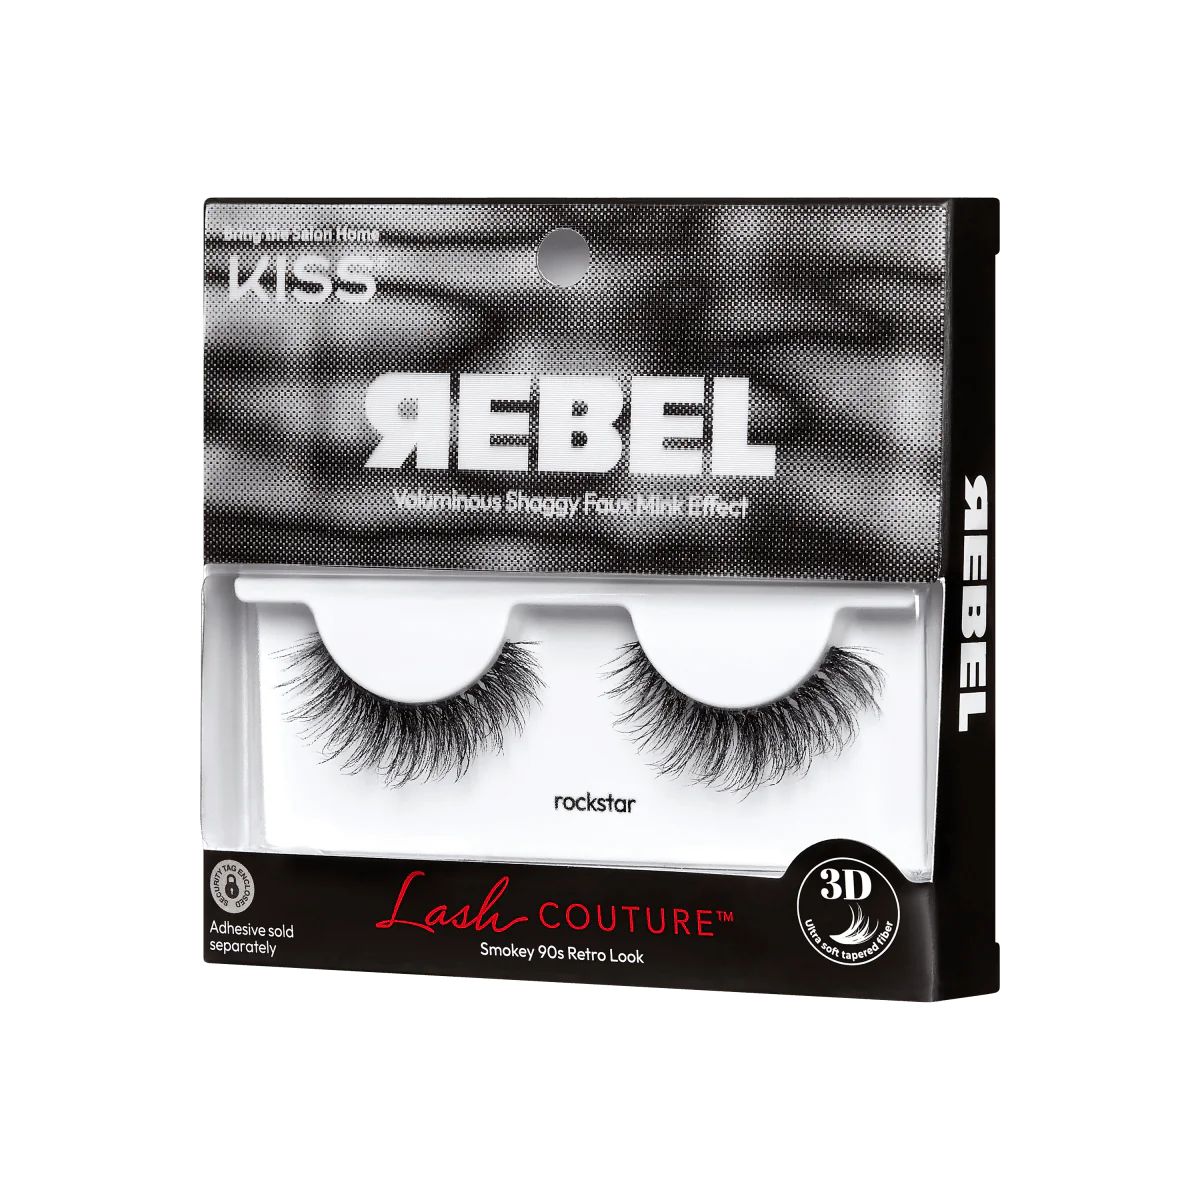 KISS Lash Couture Rebel Collection False Eyelashes Single Pack, rockstar, 1 Pair | KISS, imPRESS, JOAH